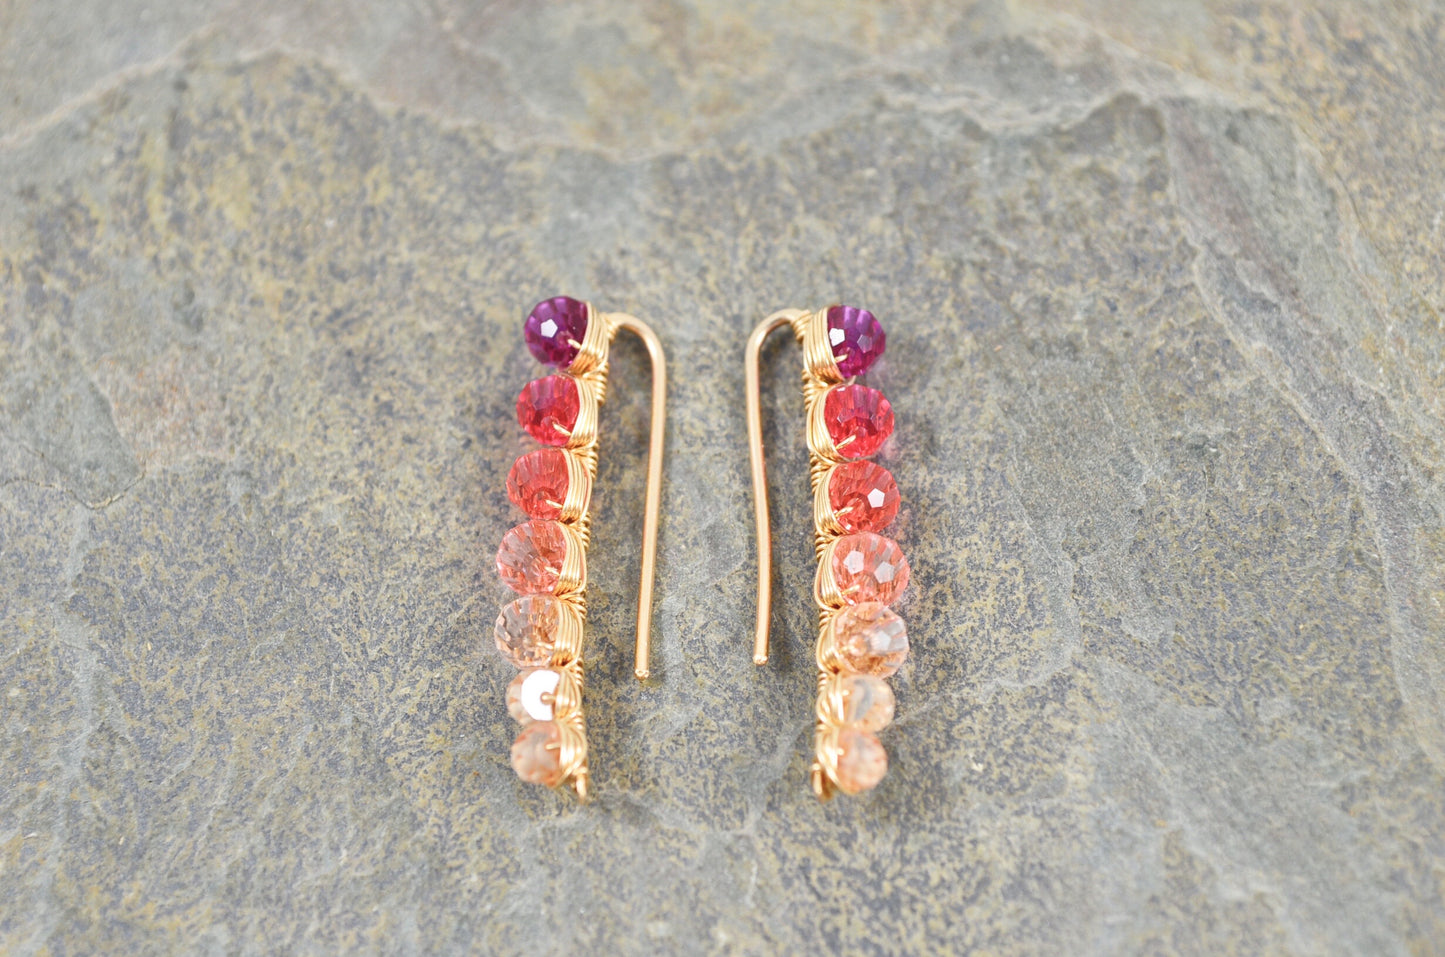 Ruby Grapefruit ombré Crystal Ear Climbers in Sterling Silver or 14k Gold Fill, ear crawler earrings